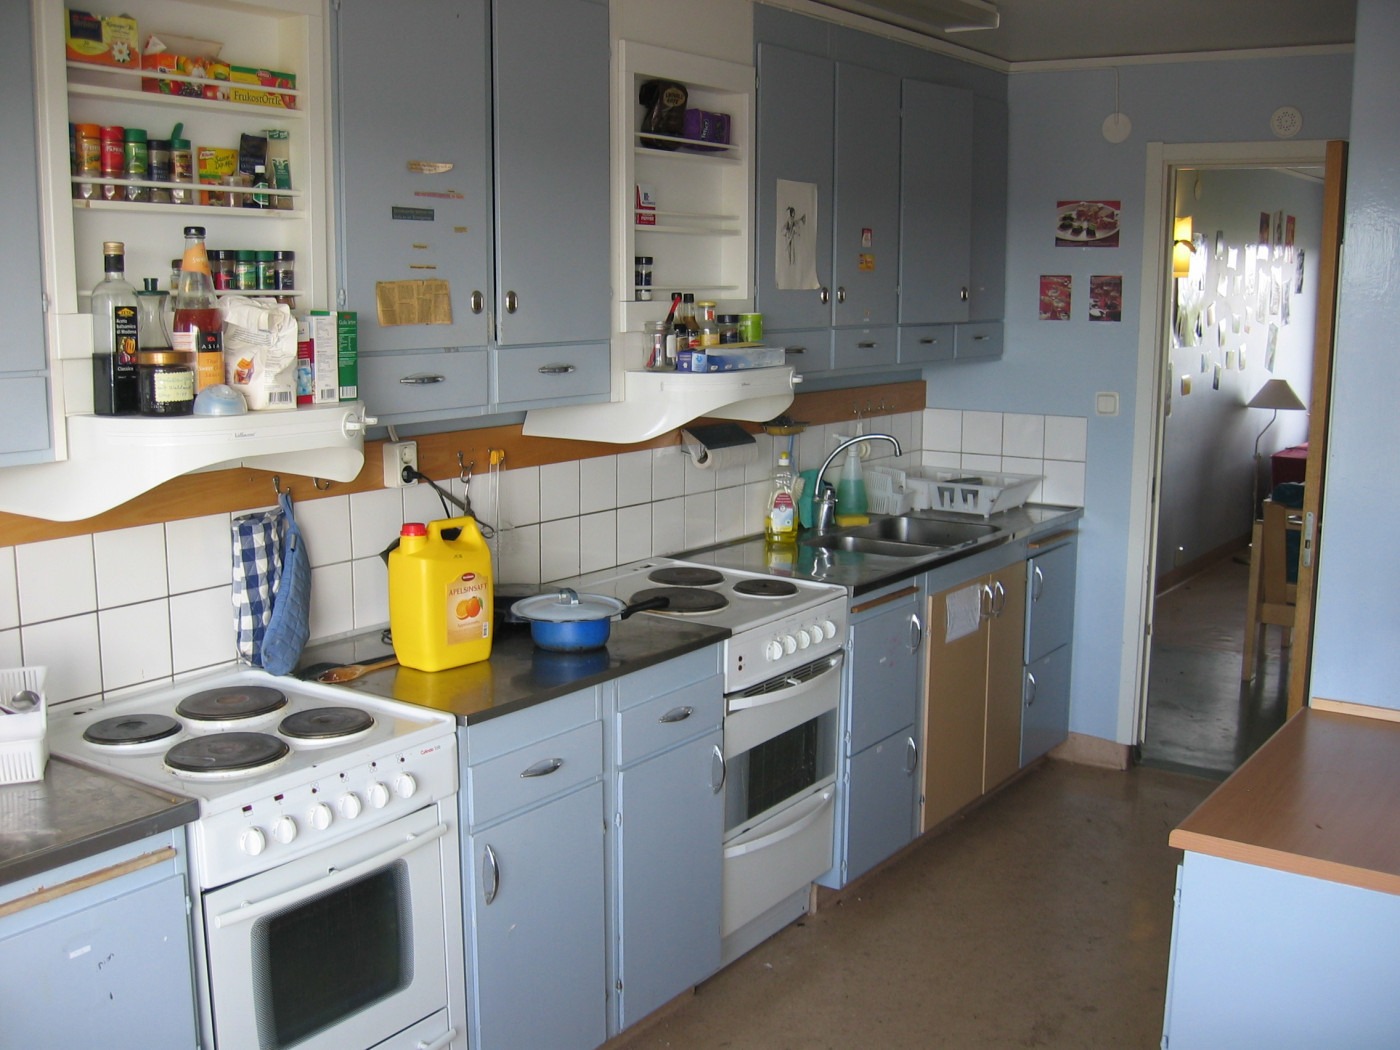 Student Kitchen/ Image: Wikimedia Commons